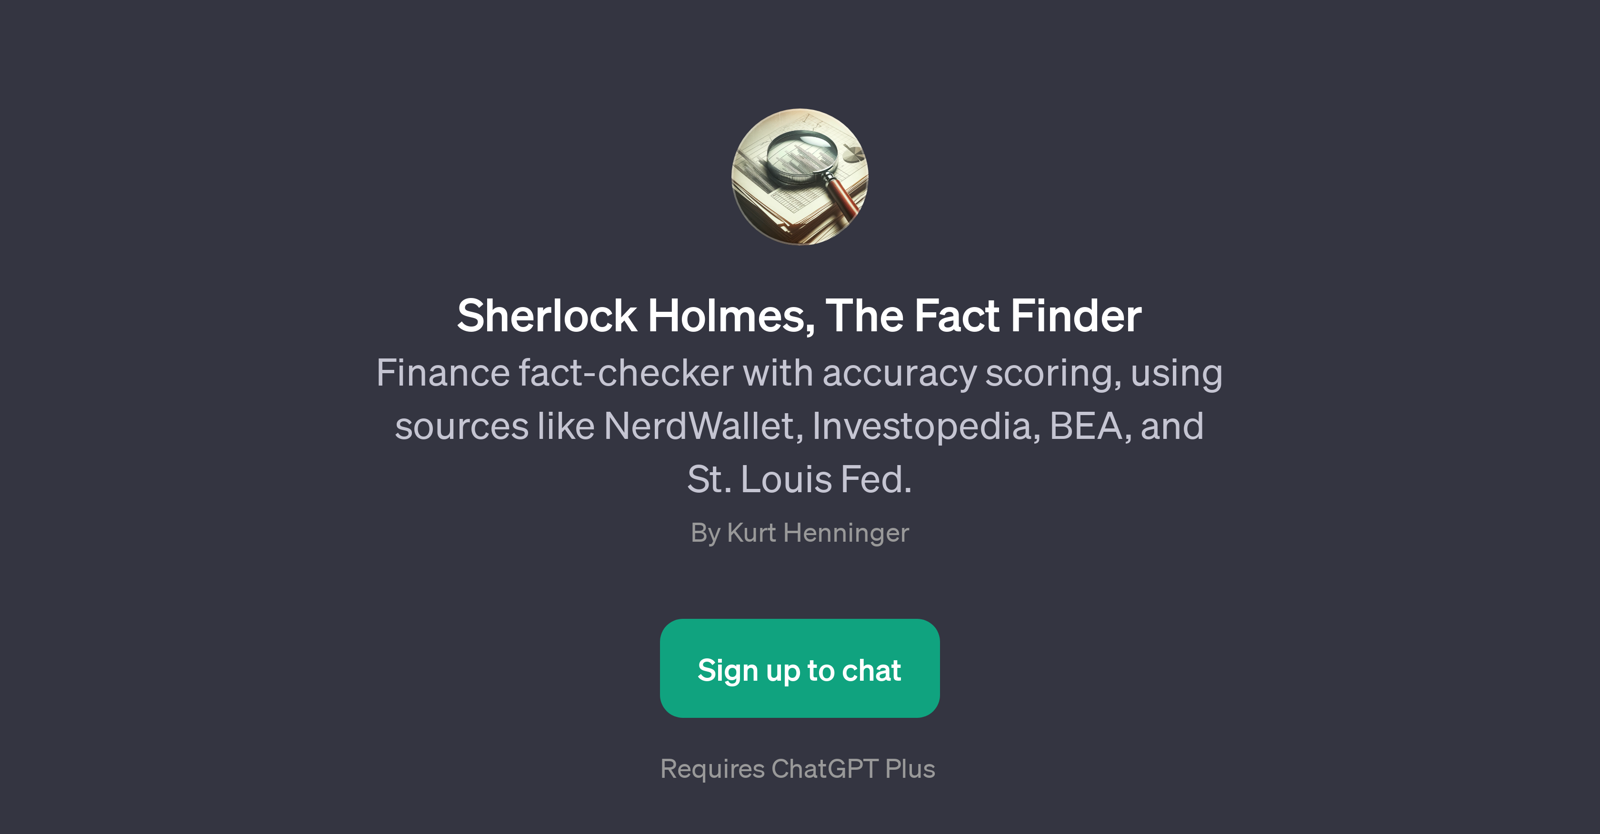 Sherlock Holmes, The Fact Finder website